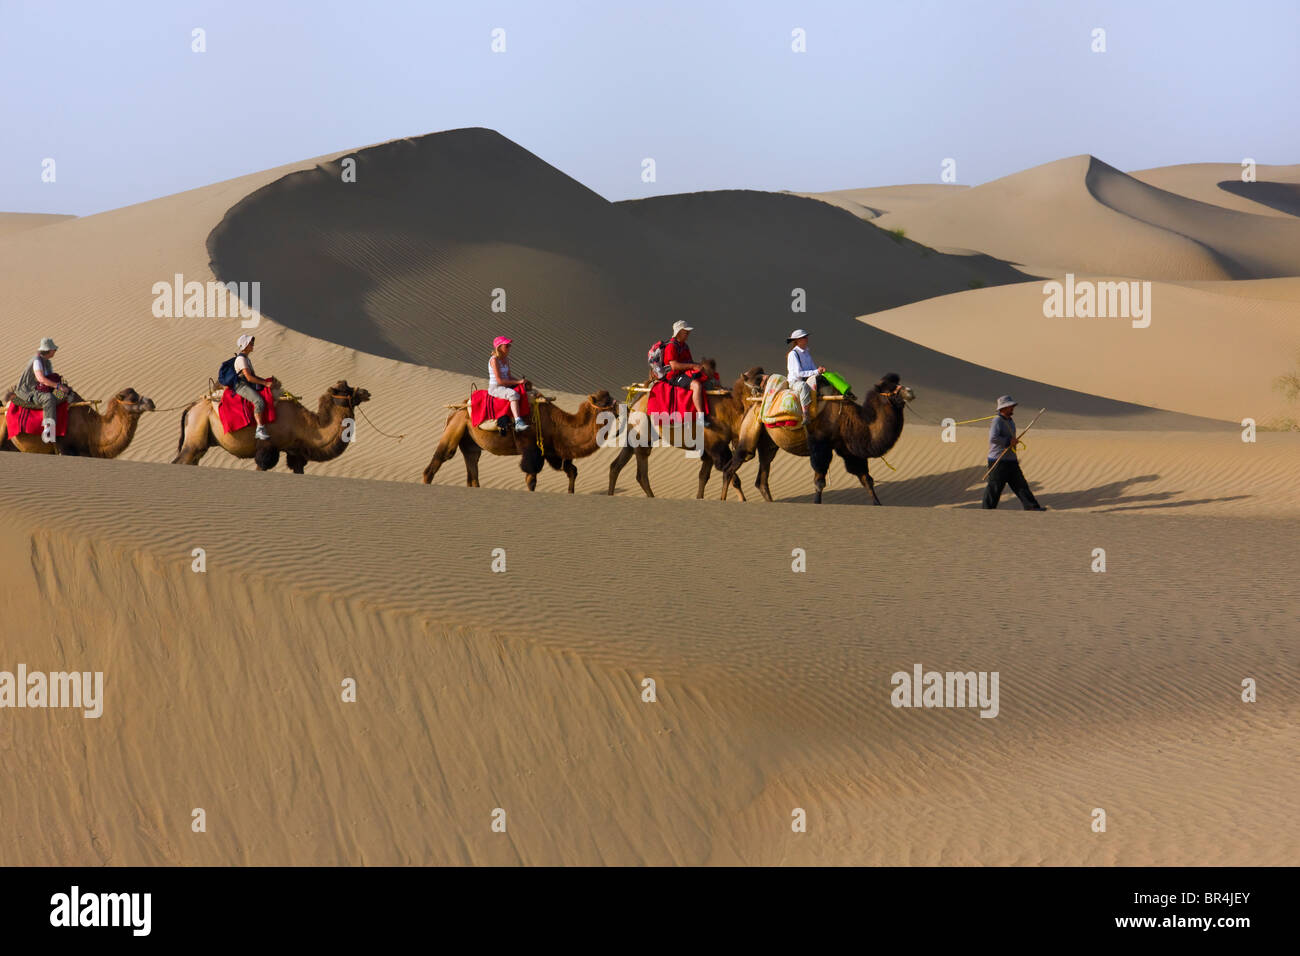 Camel caravan with sand dune in the desert, Aksu, Xinjiang, China Stock Photo